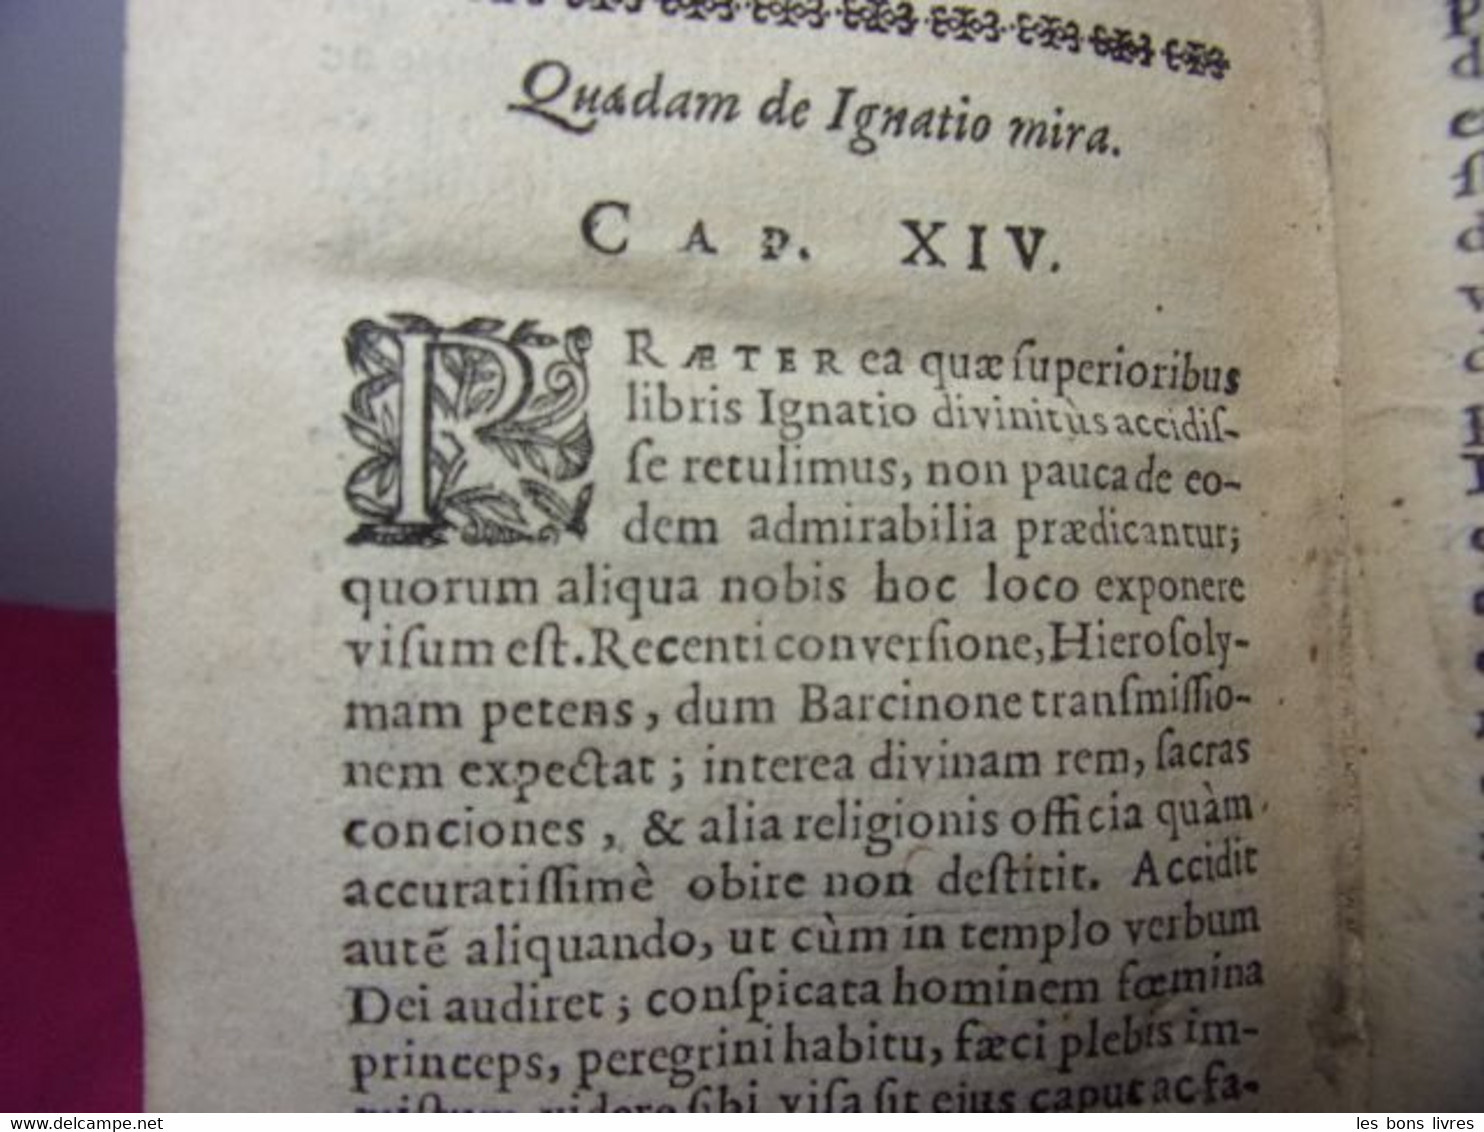 1658. Ioanne Petro Maffeio. Vita St Ignatii, fondatoris societatis Jesu